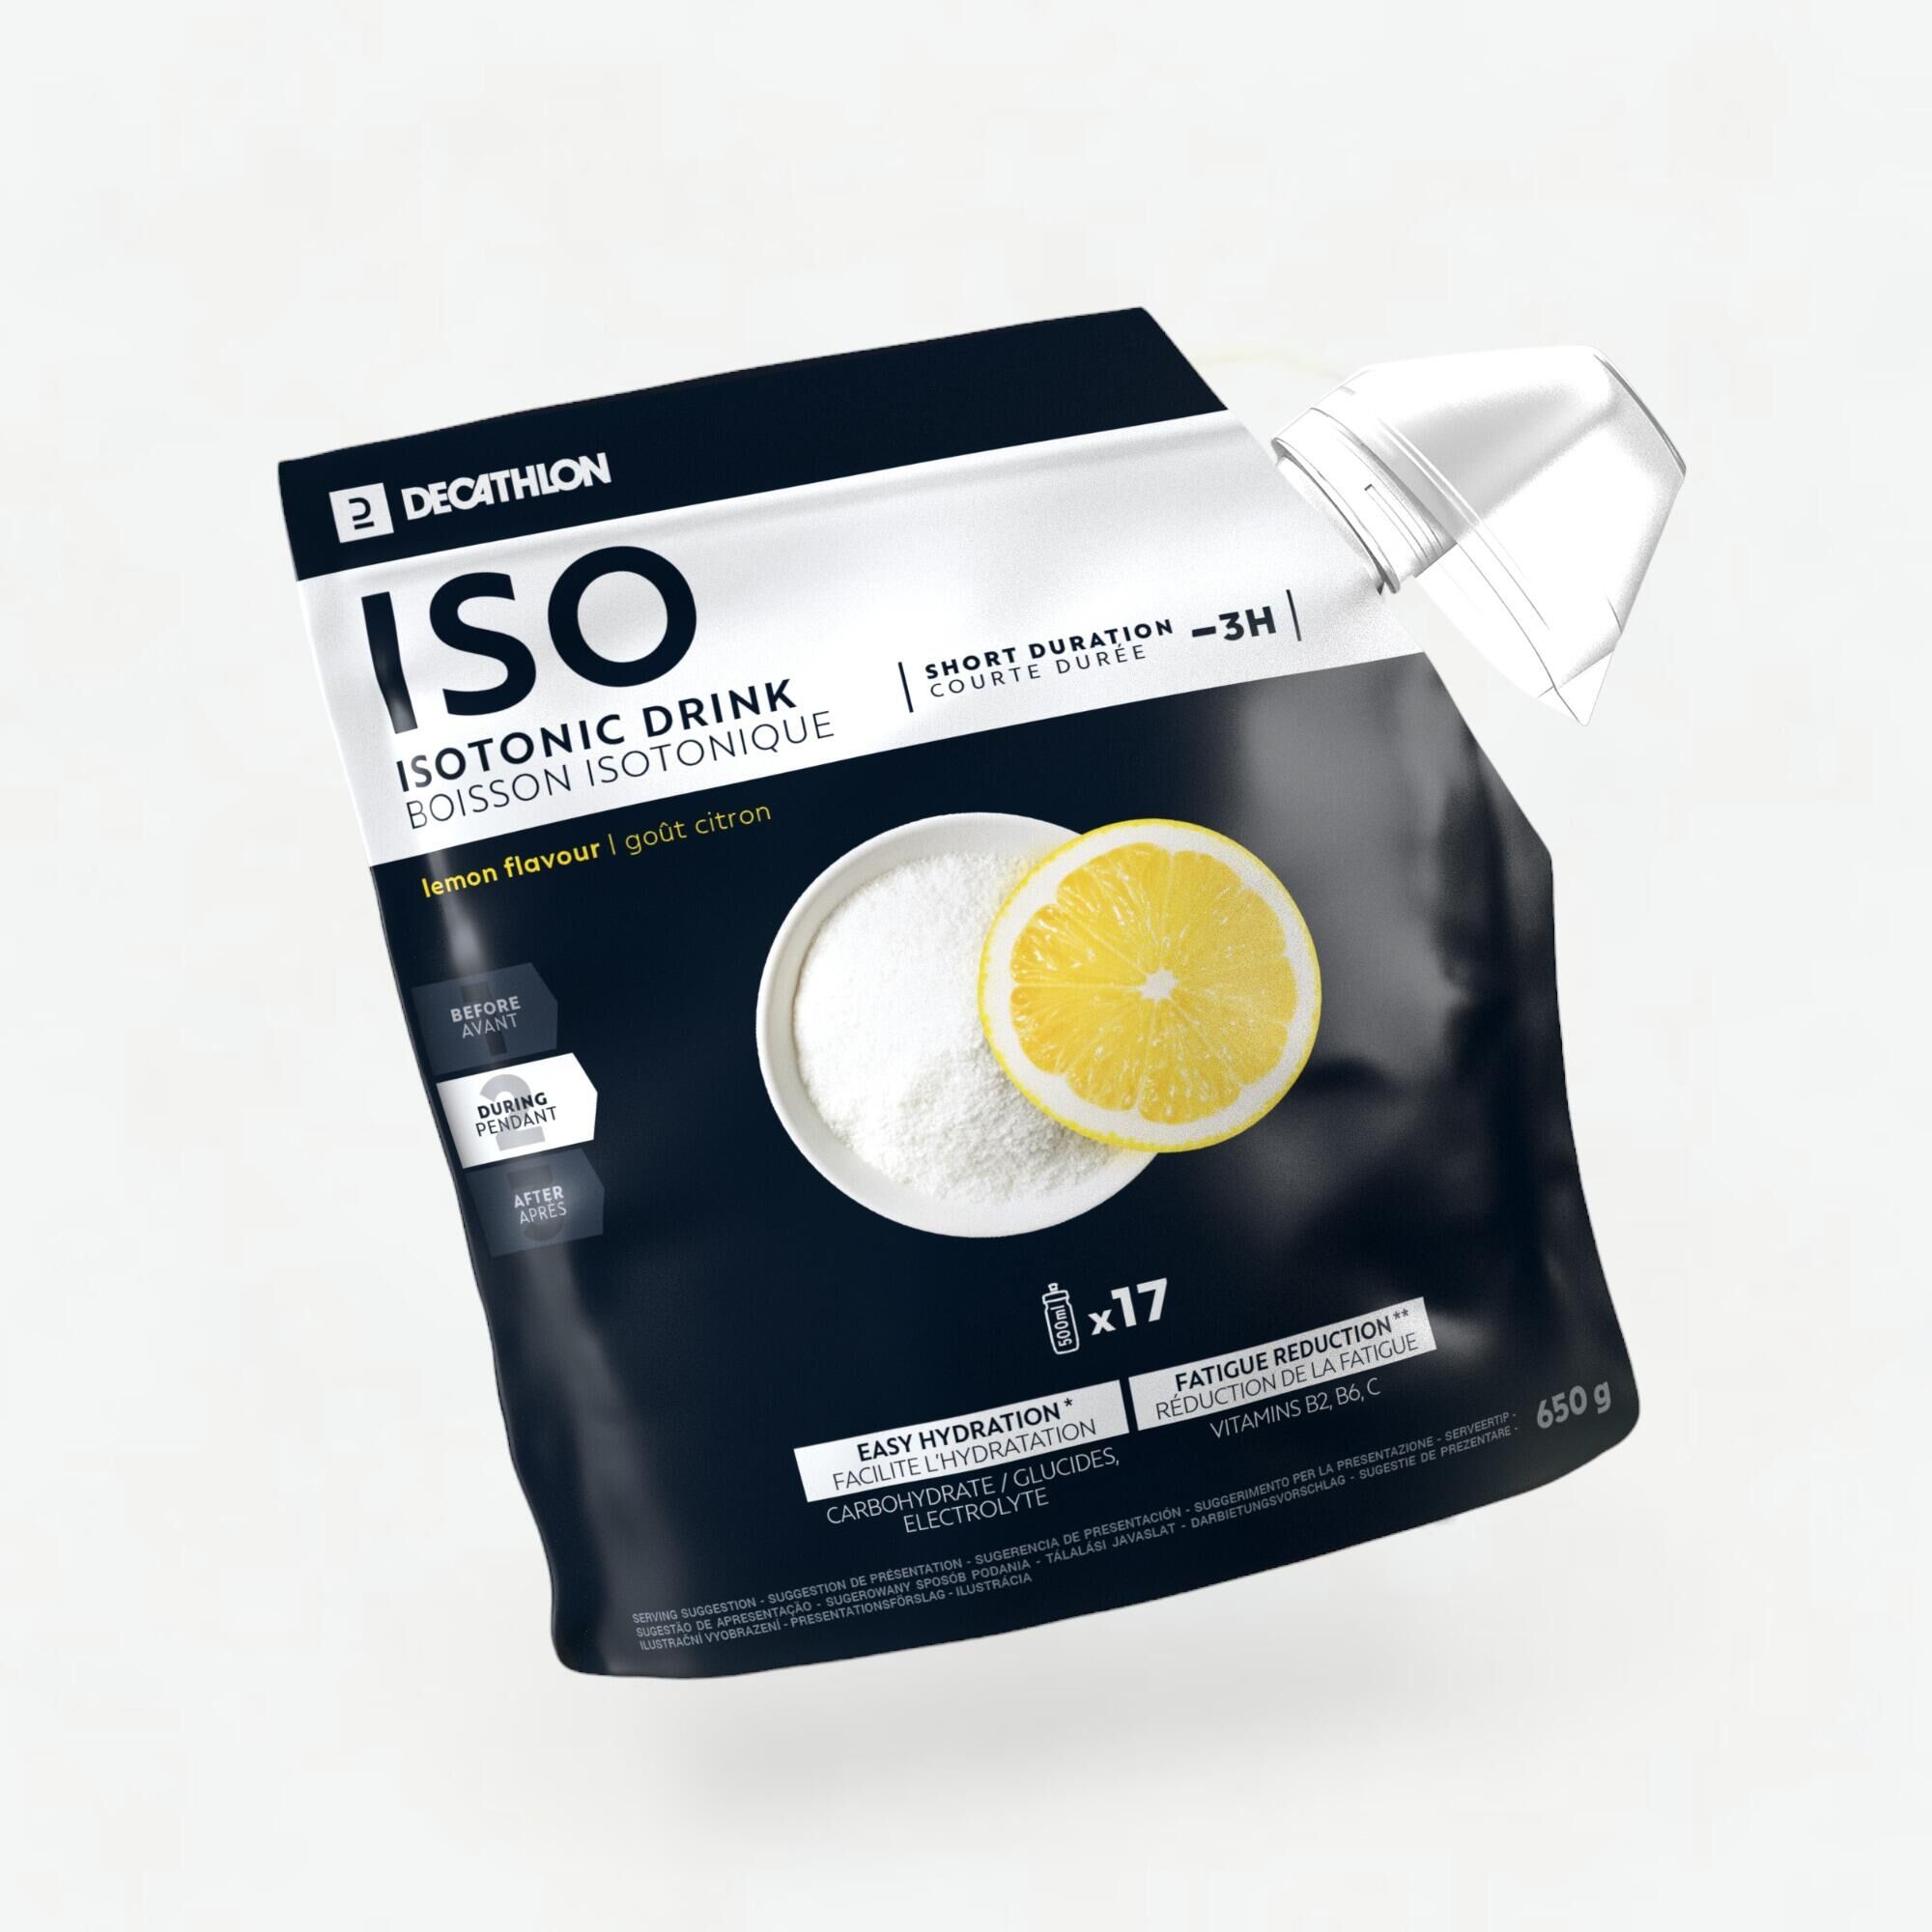 DECATHLON ISO Isotonic Drink Powder 650g - Lemon